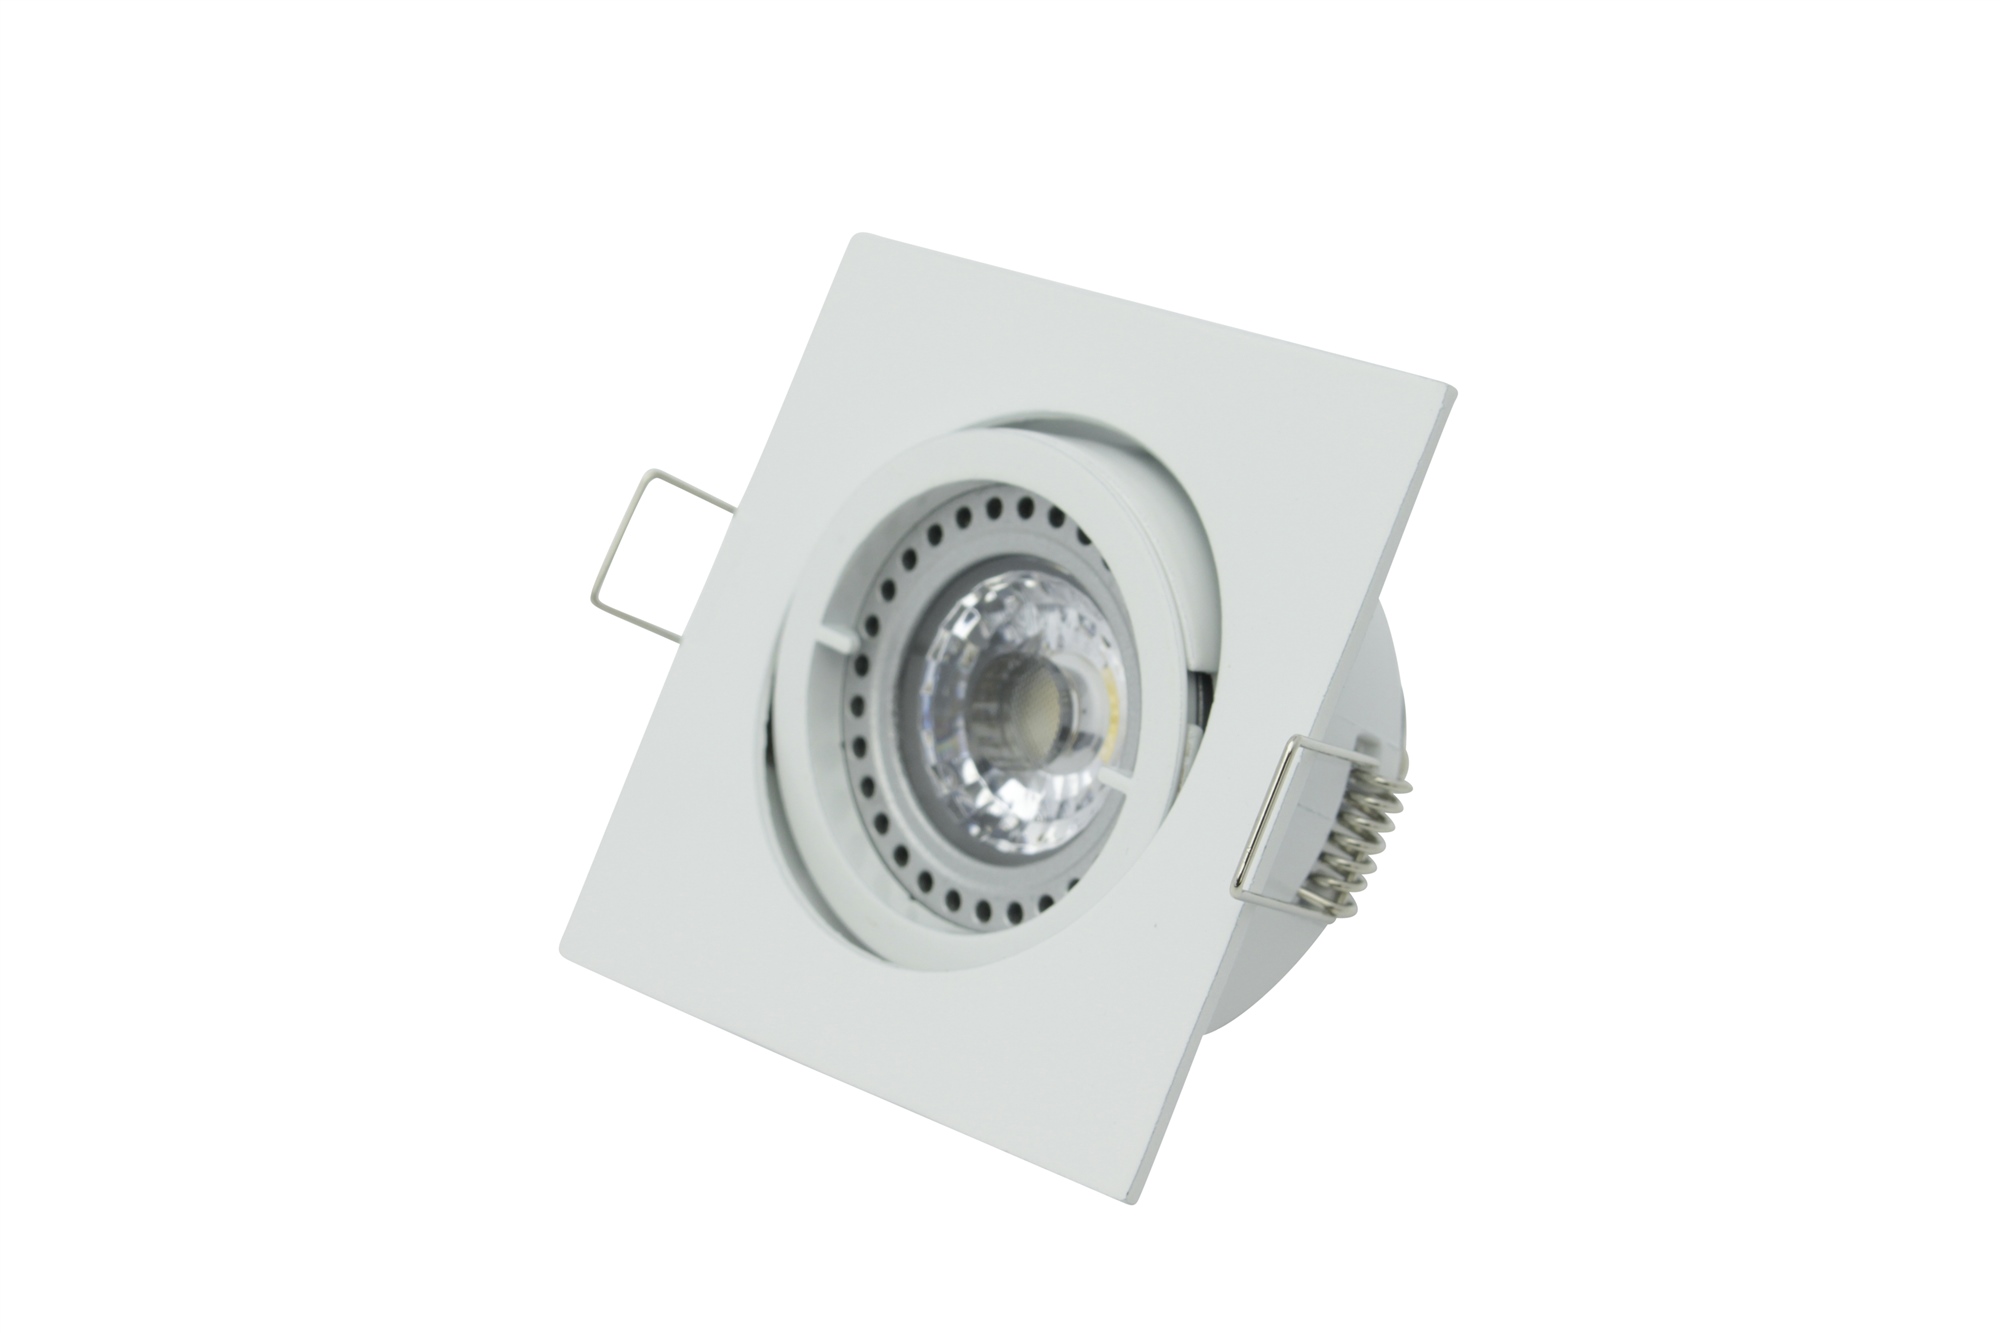 Lampenlux LED-Einbaustrahler Spot Snap eckig weiß schwenkbar 8.2x8.2cm 12V MR16 rostfrei Aluminium